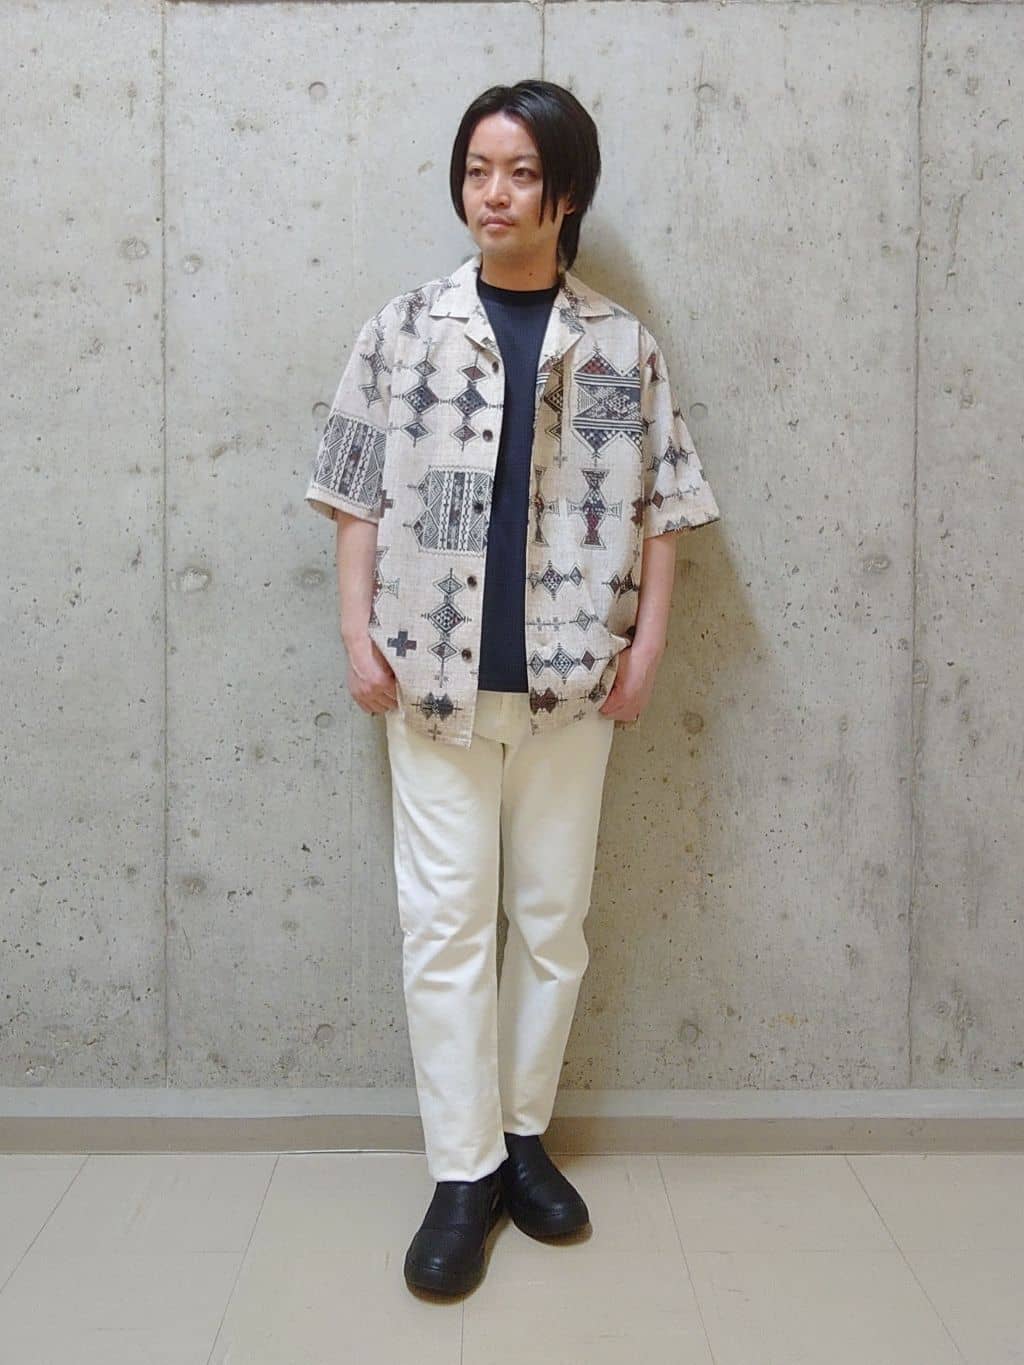 TAKEO KIKUCHIのトライバル パターン オープンカラーシャツを使った